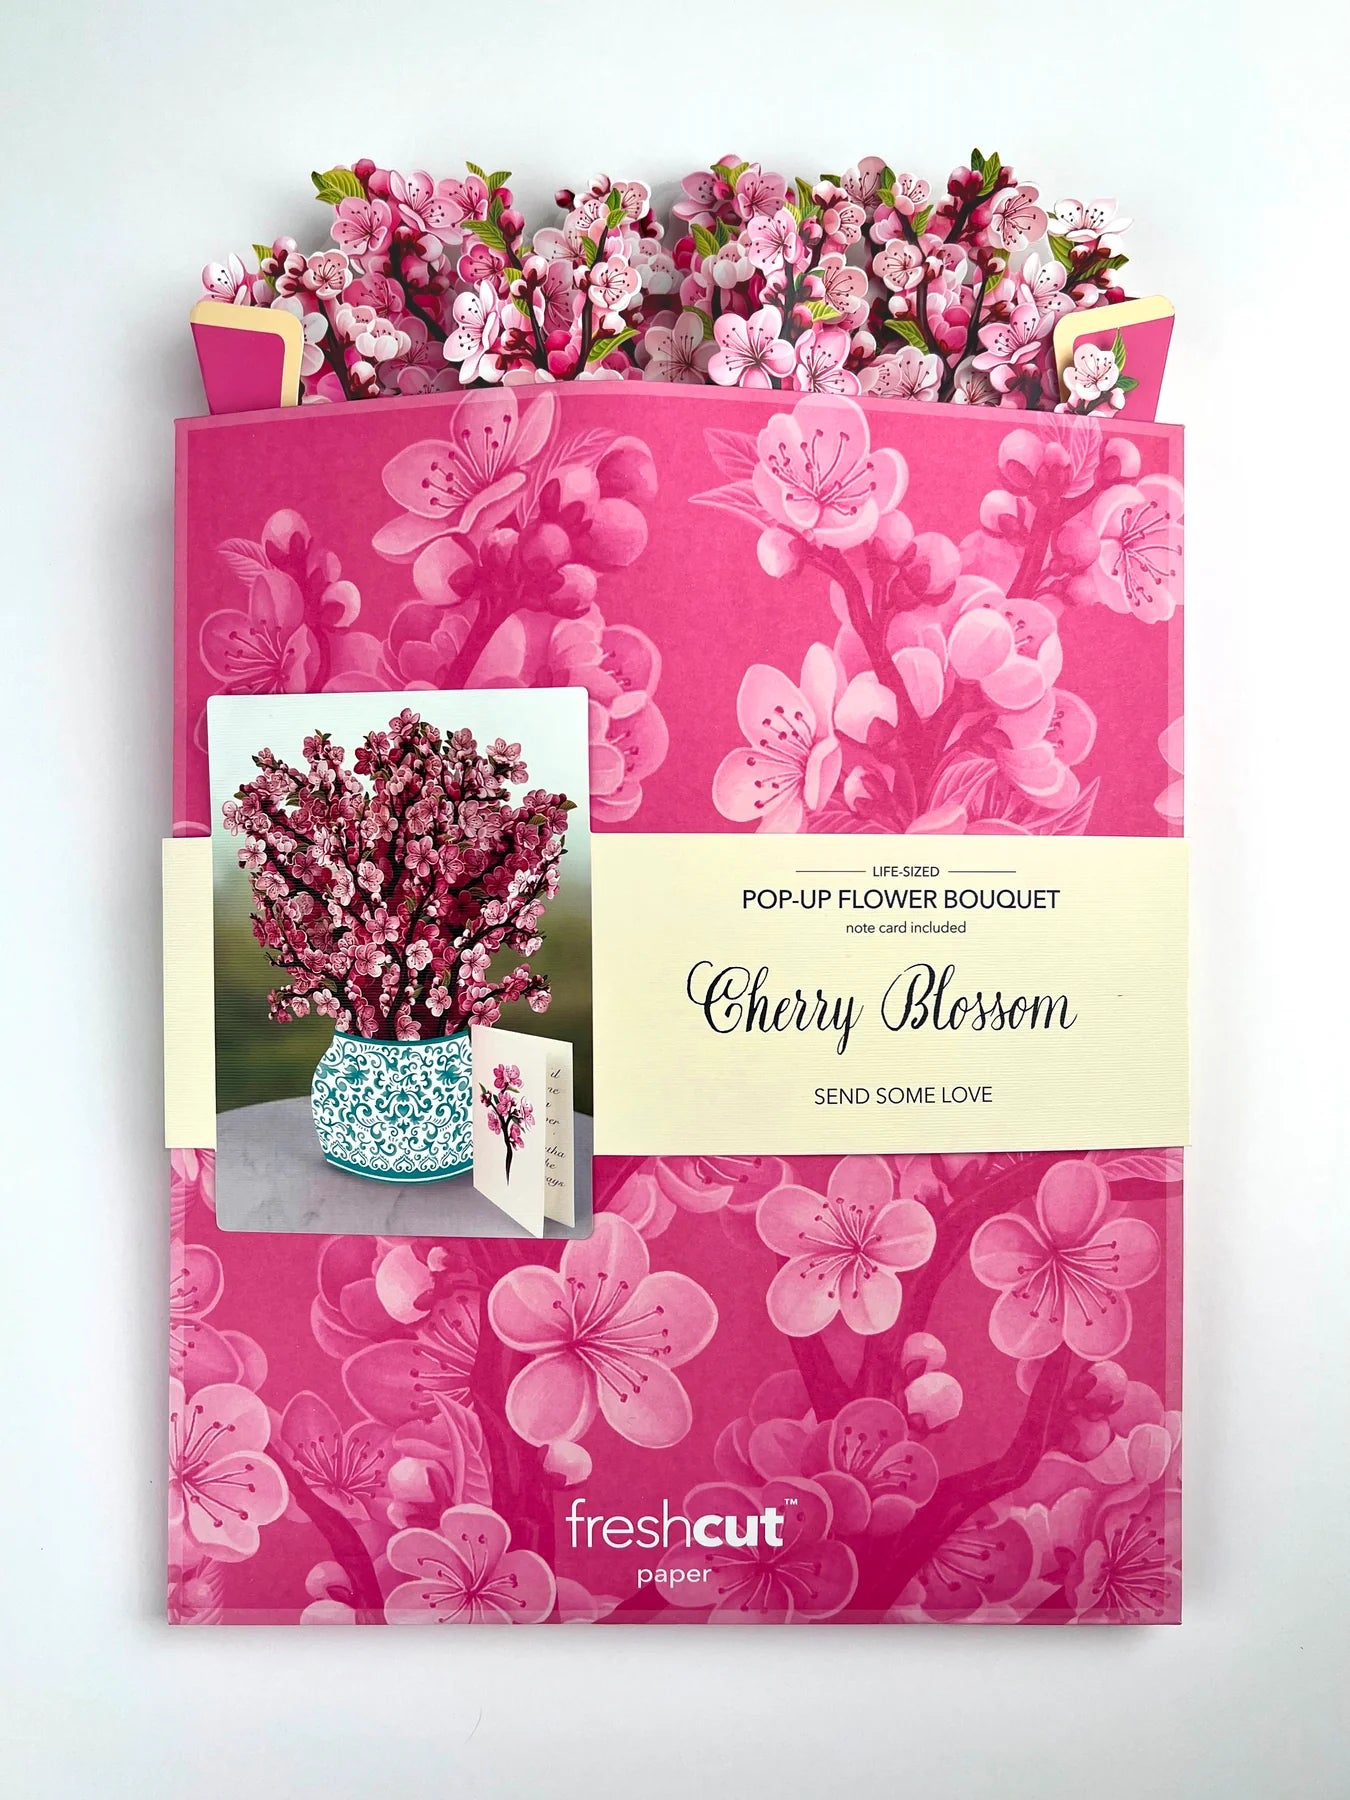 Cherry Blossom FreshCut Paper Bouquet - Lark - A Modern Marketplace